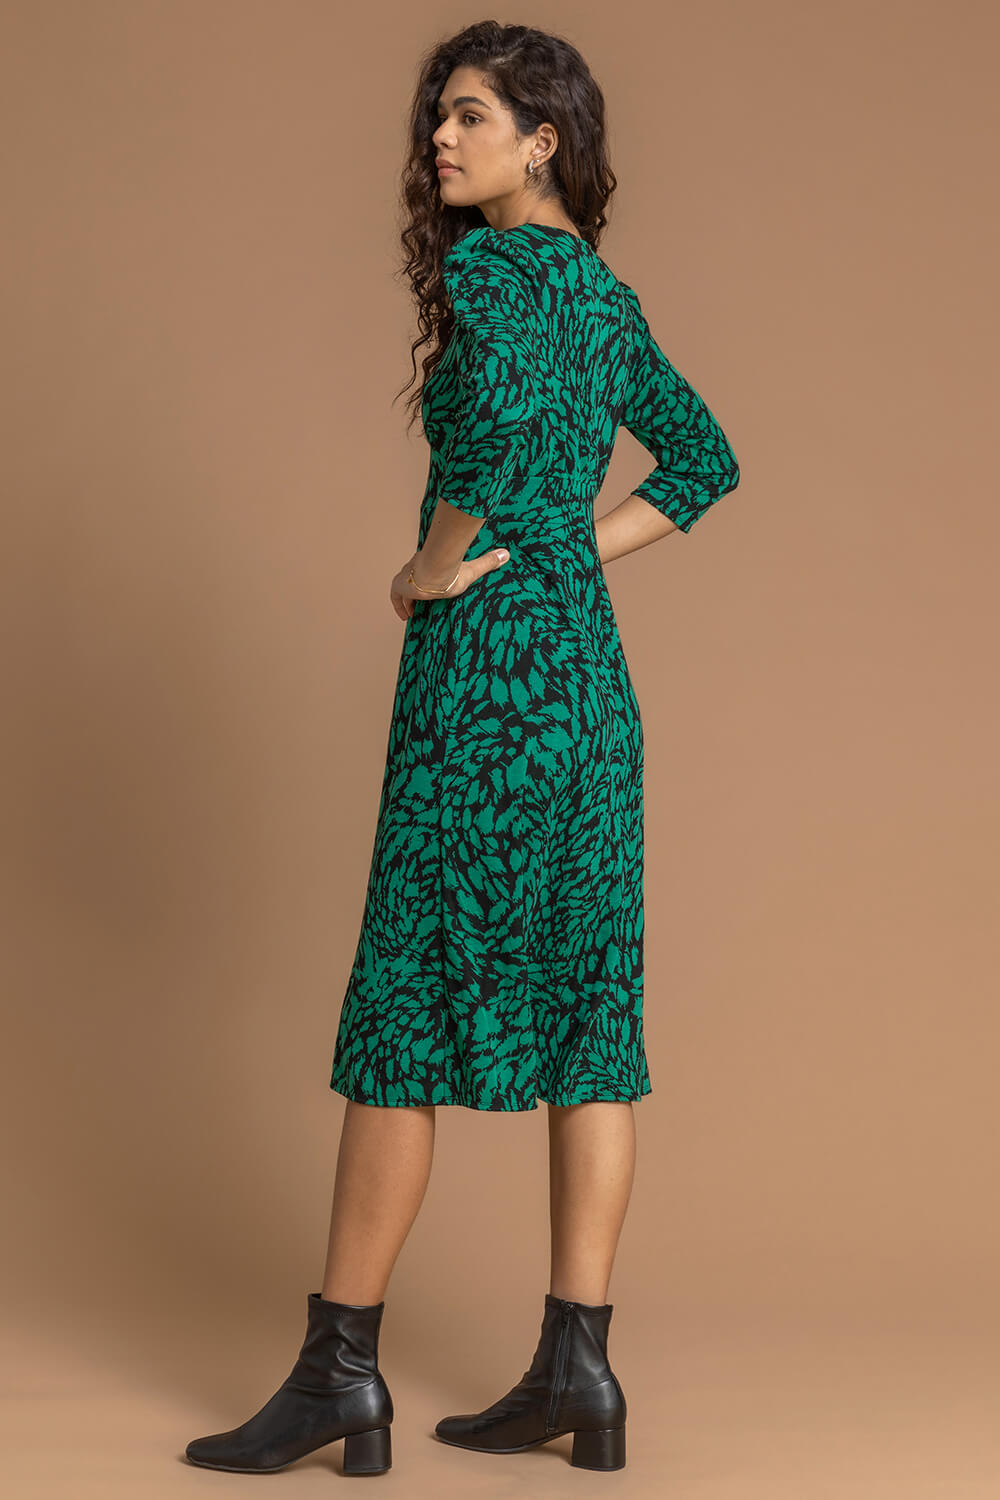 Dark Green Animal Print Jacquard Dress, Image 2 of 4